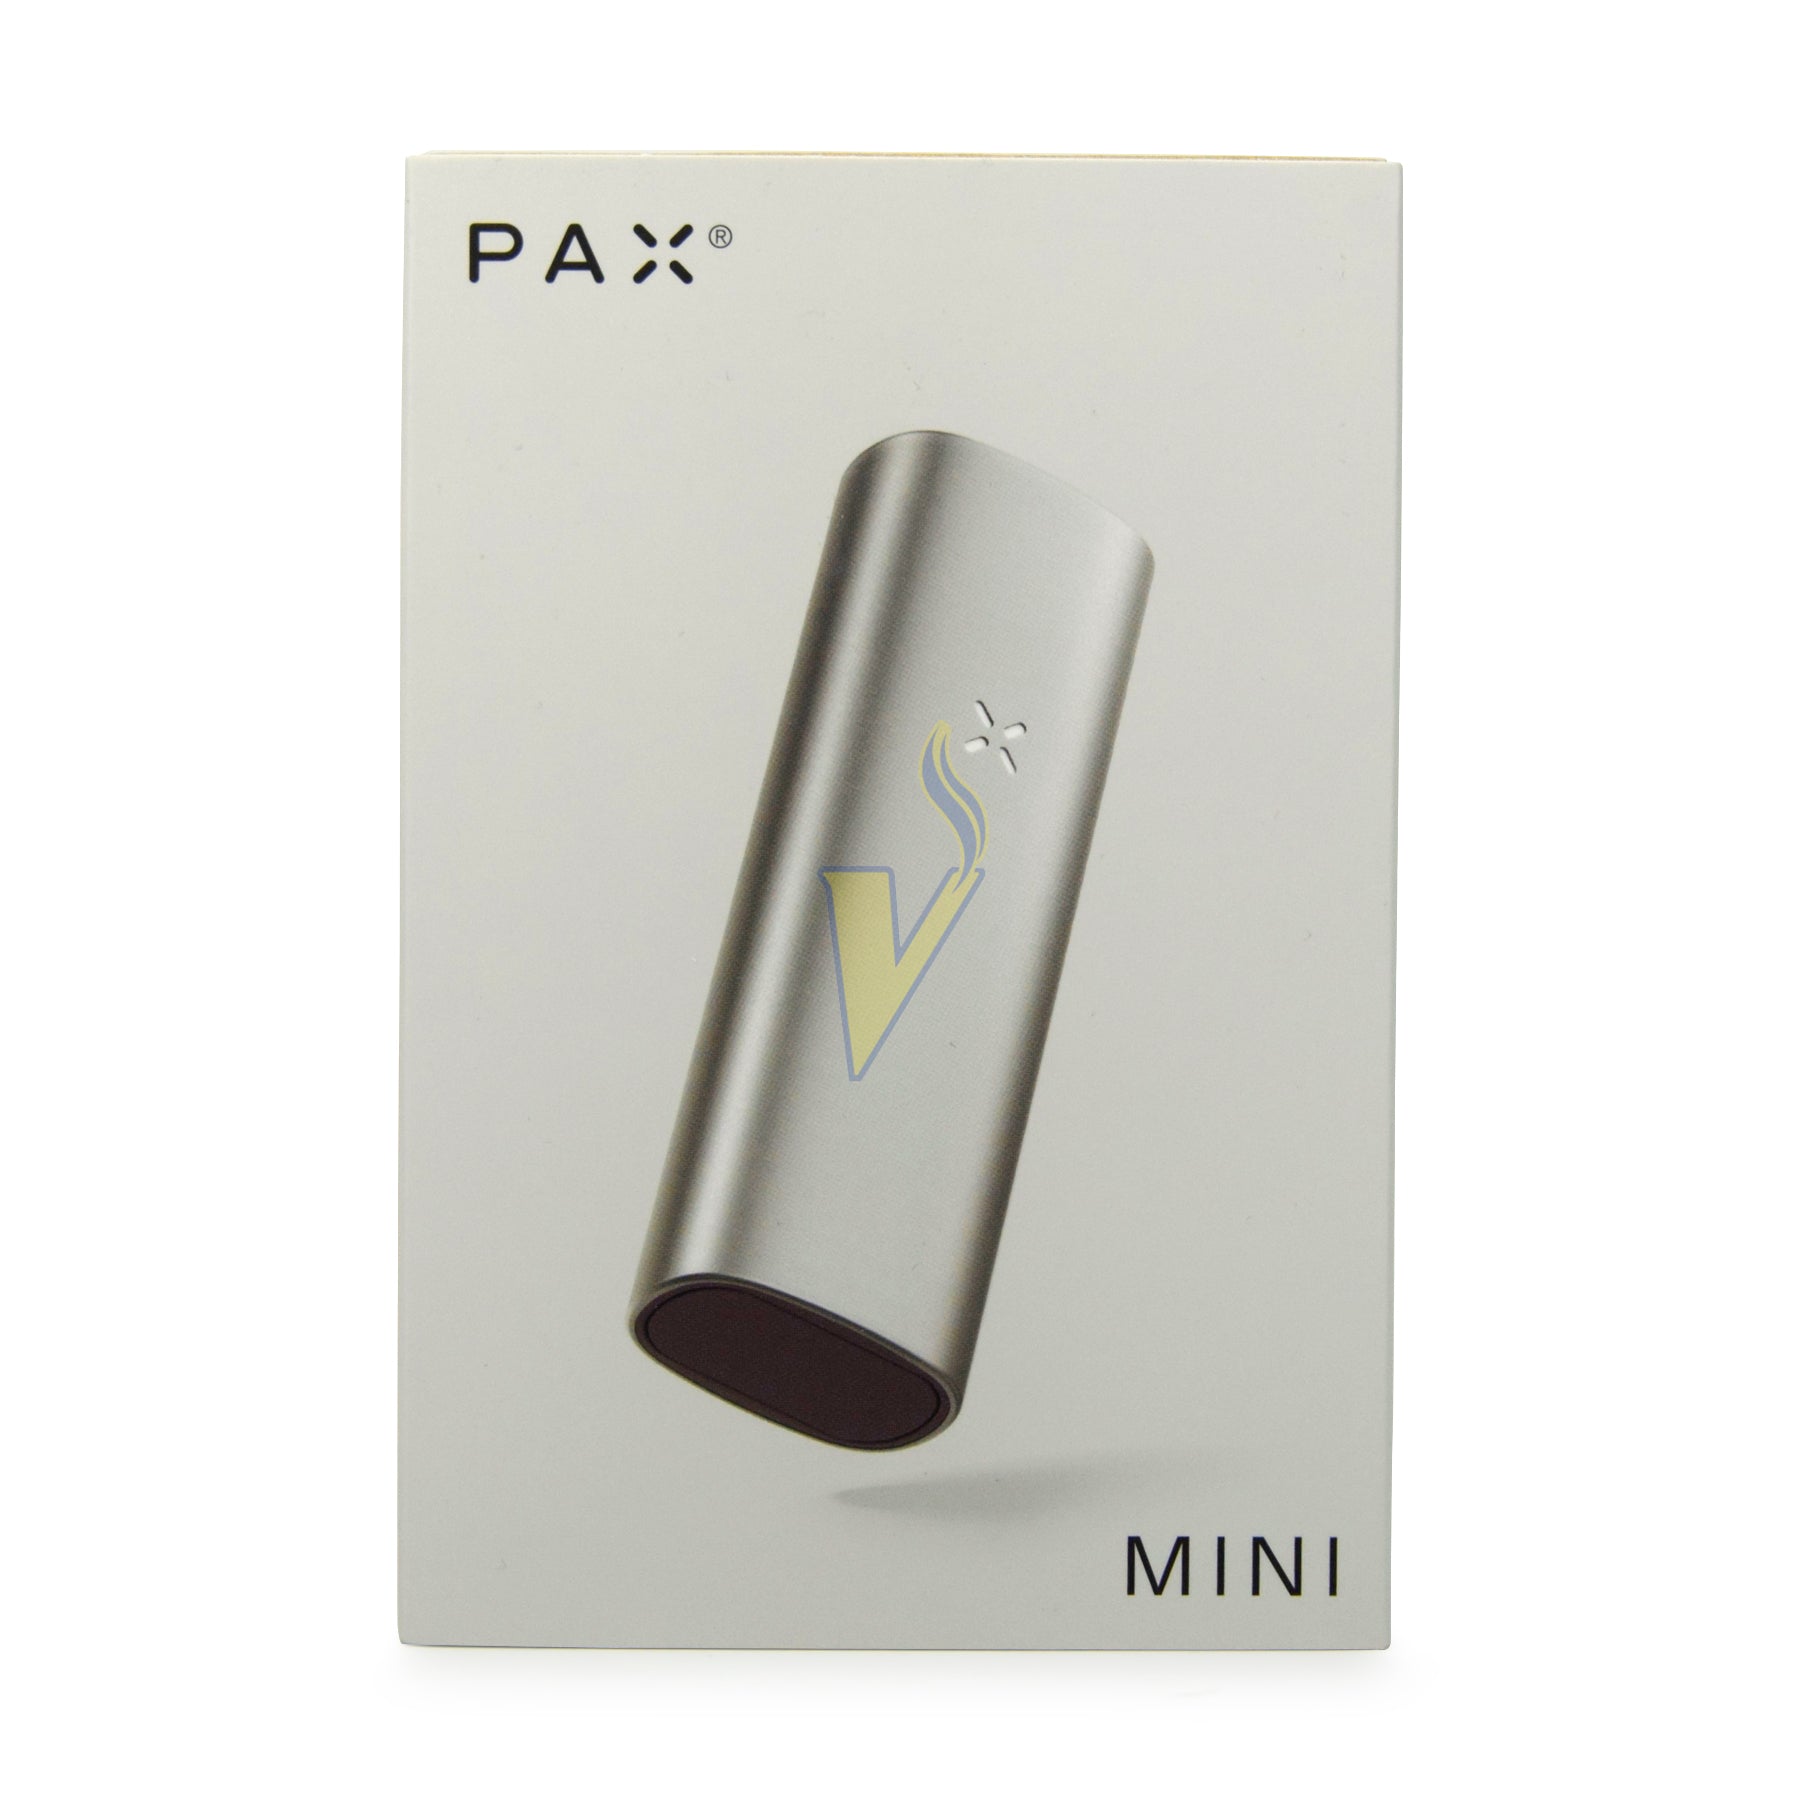 PAX Mini - Buy at $115 - City Vaporizer